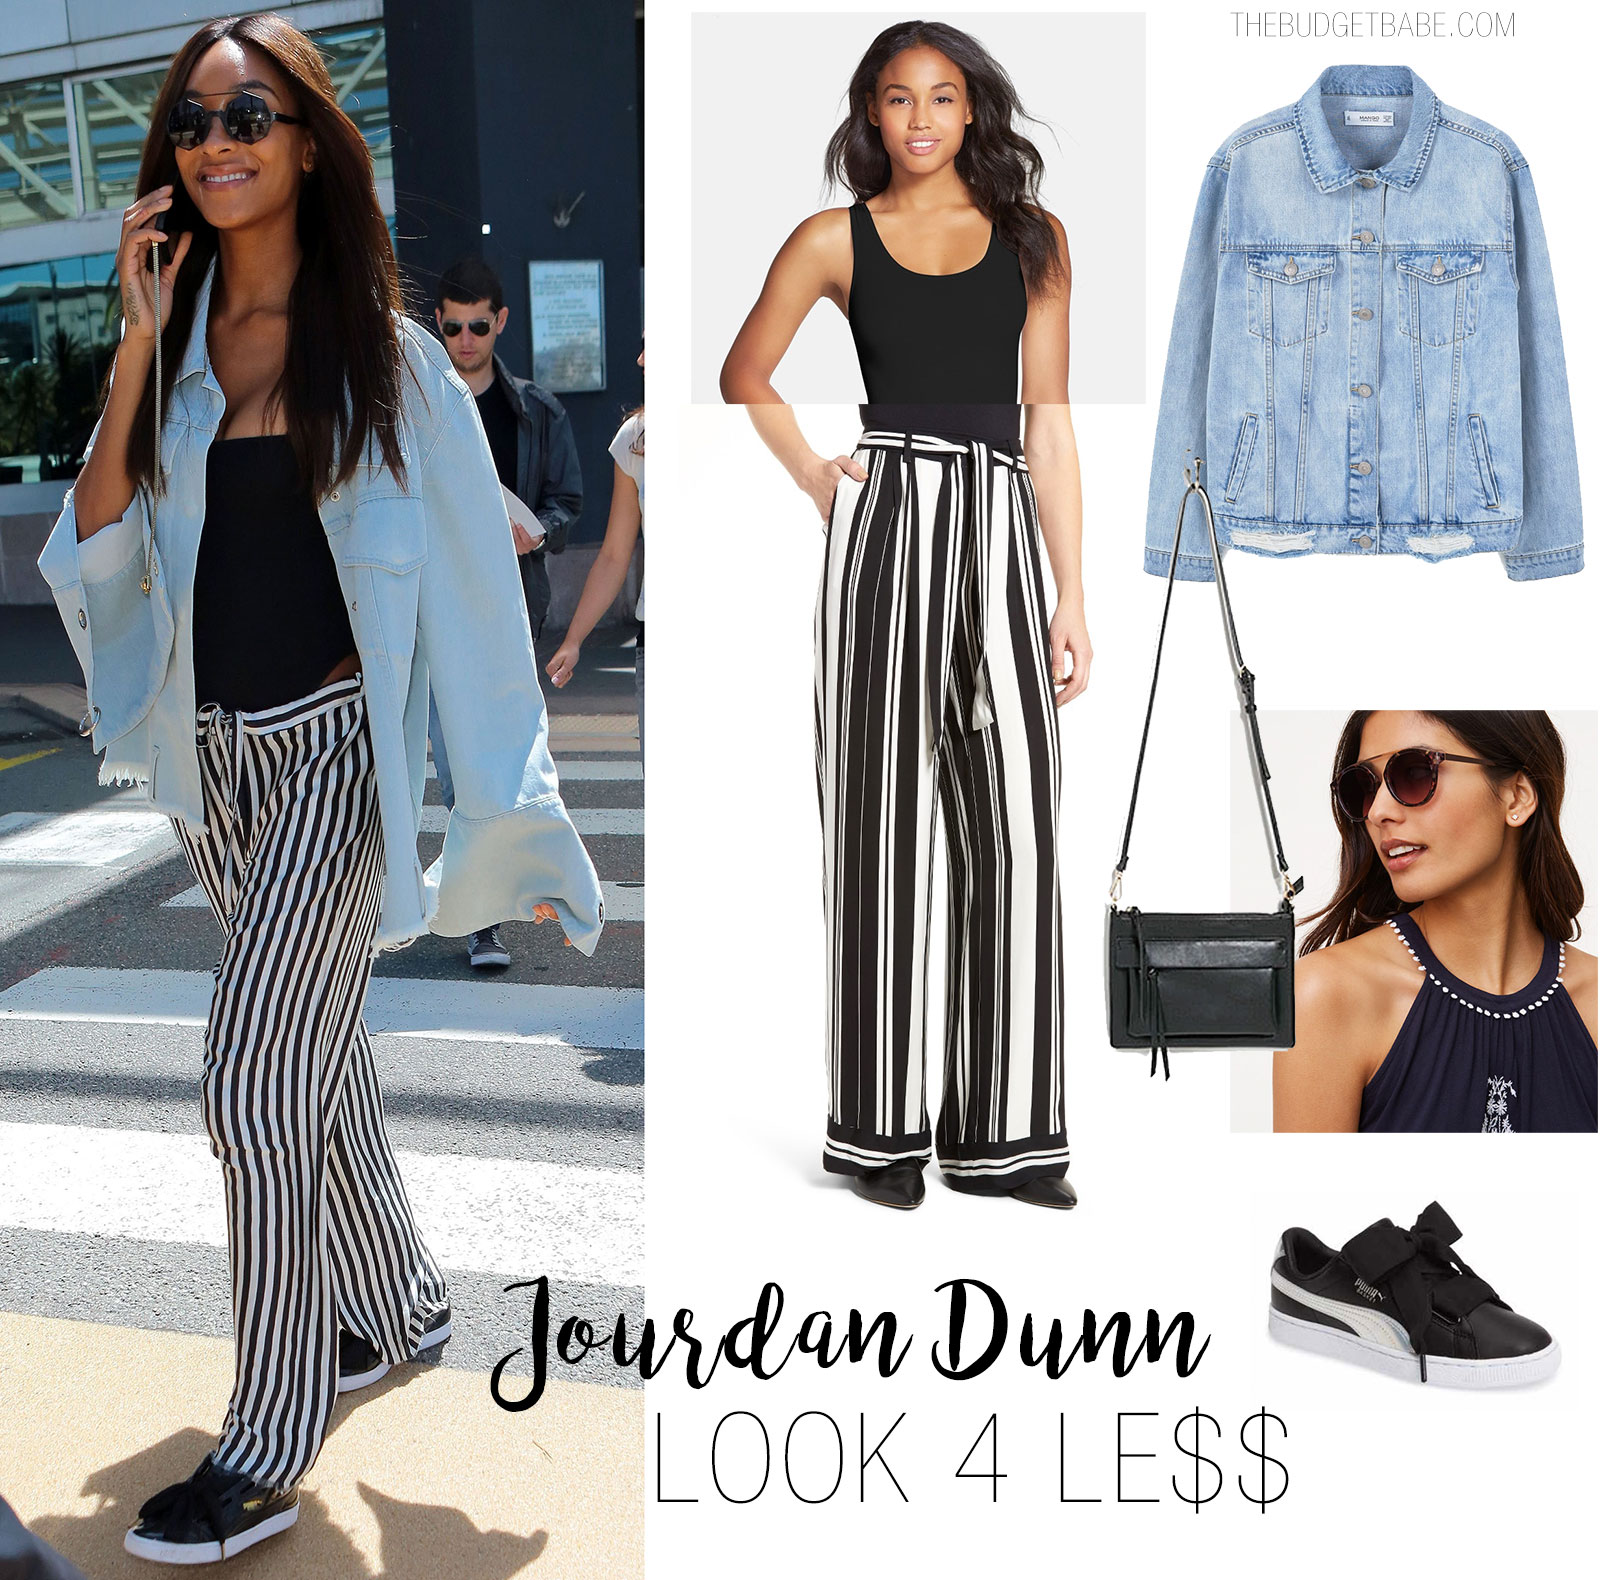 Jourdan Dunn wears vertical stripe pants with an oversized denim jacket and sneakers.